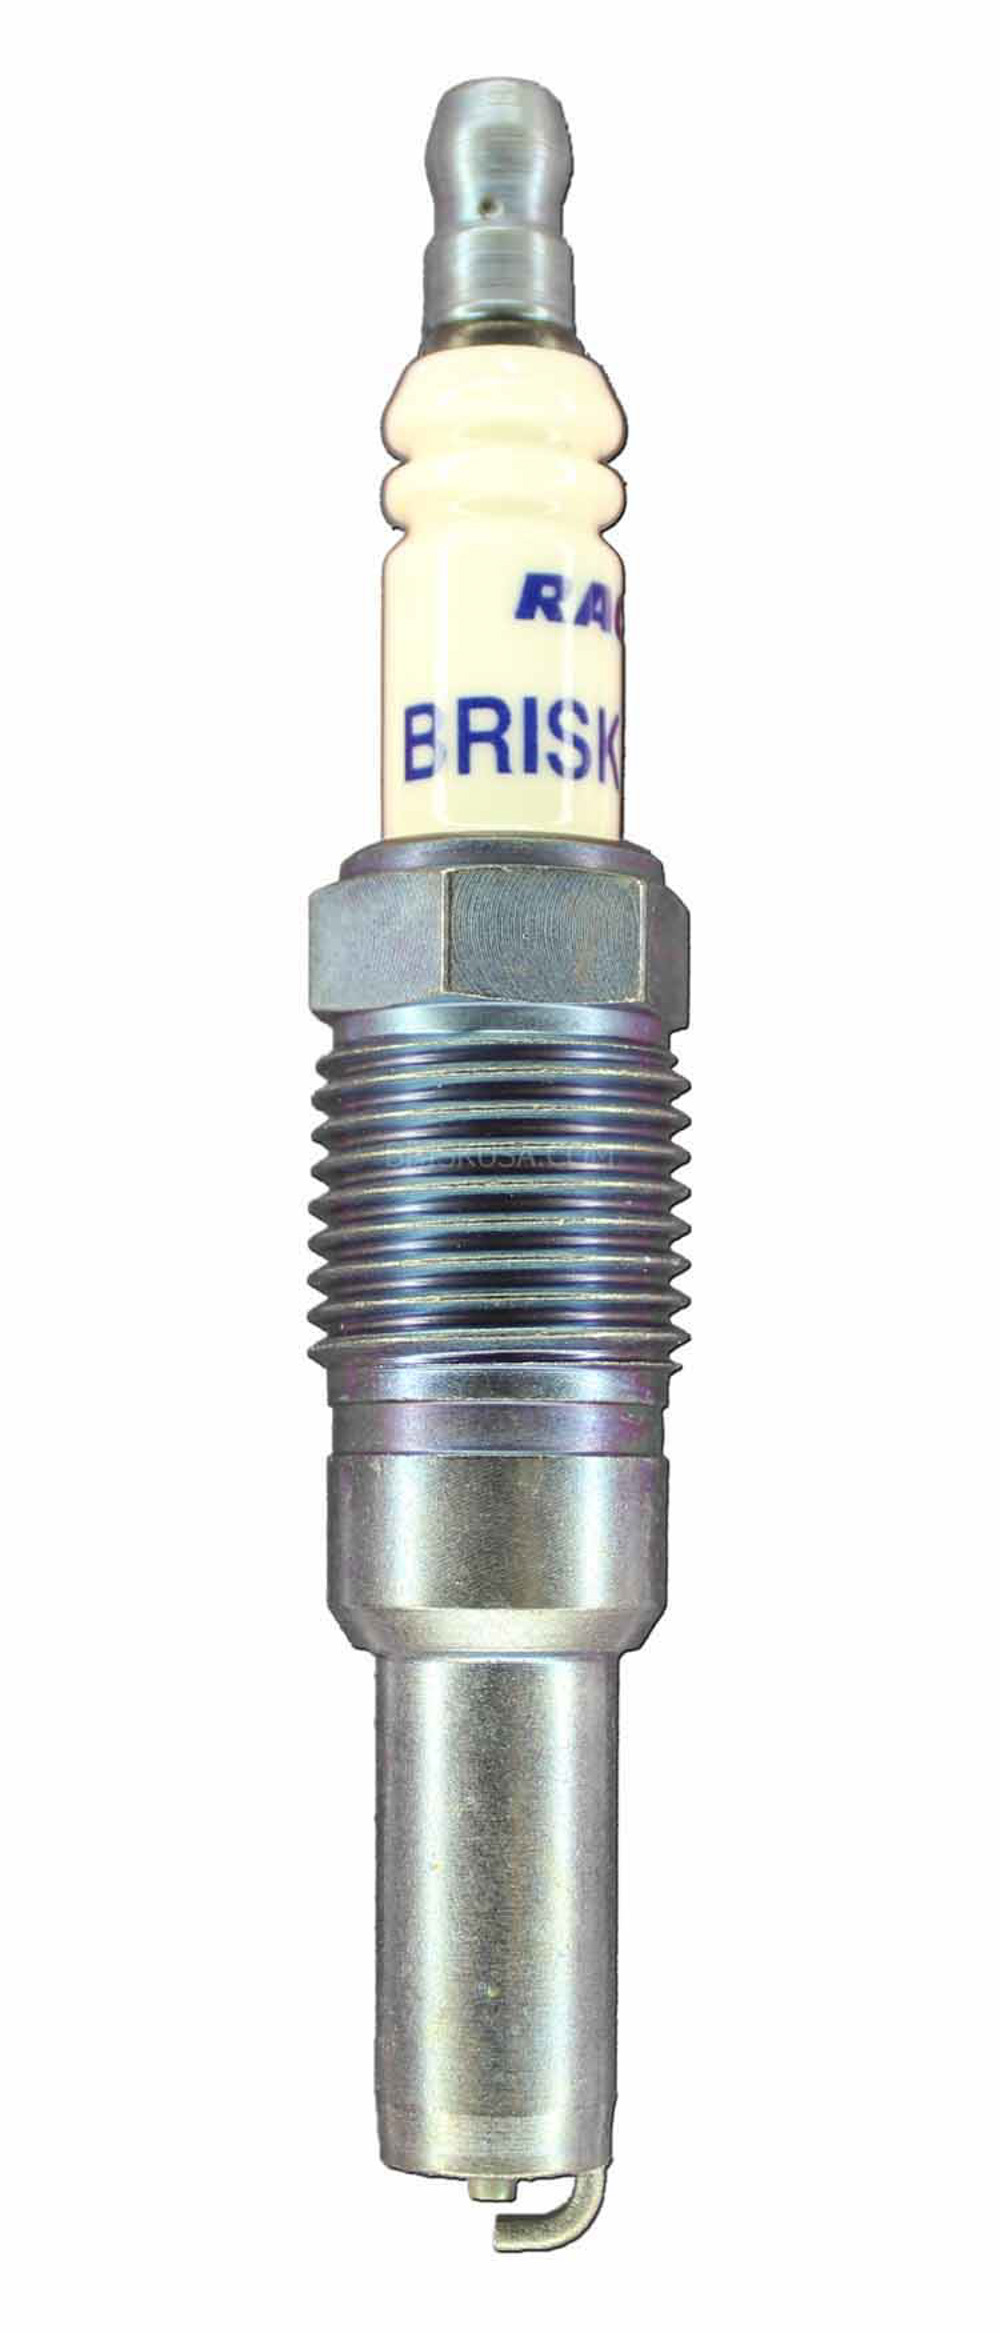 Brisk Racing Plugs 3VR10S Spark Plug, Silver Racing, 16 mm Thread, 22 mm Reach, Heat Range 10, Tapered Seat, Resistor, Each